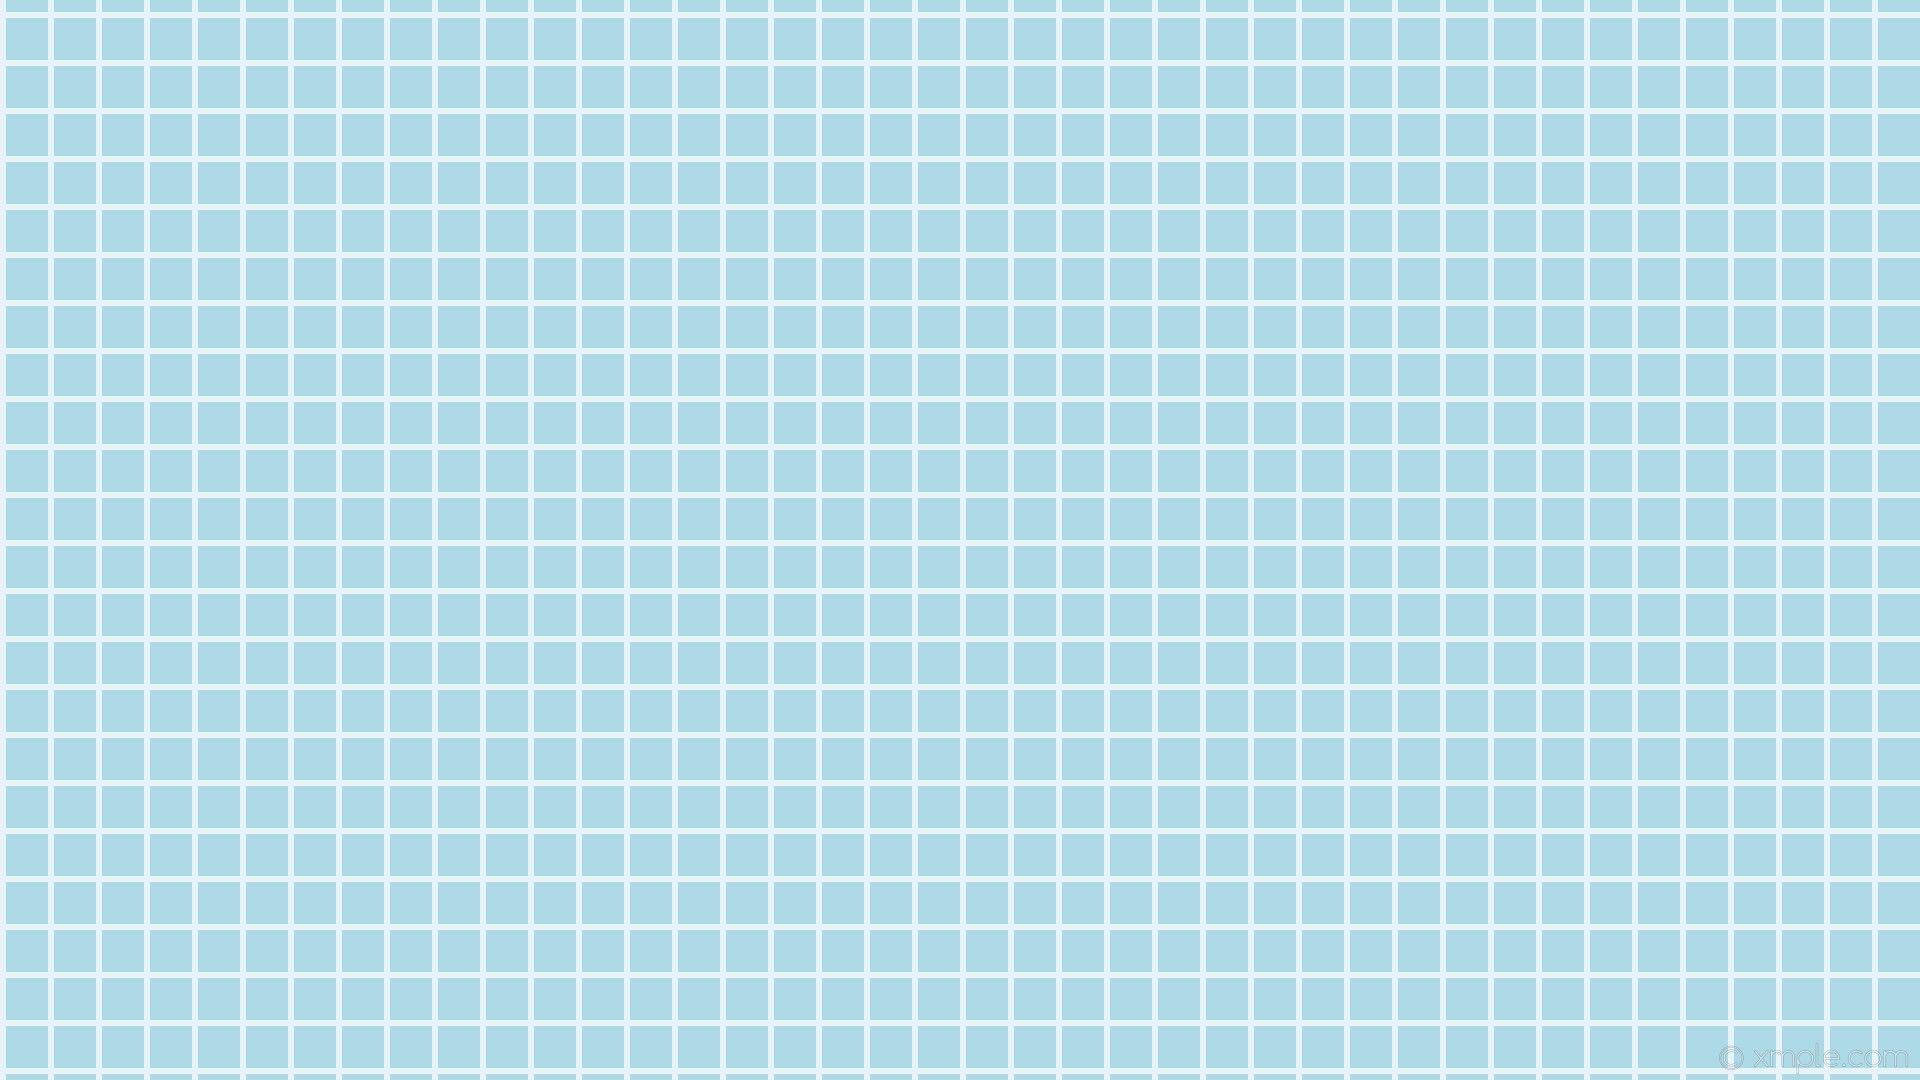 Small Tiles In A Blue Pastel Aesthetic Desktop Wallpaper